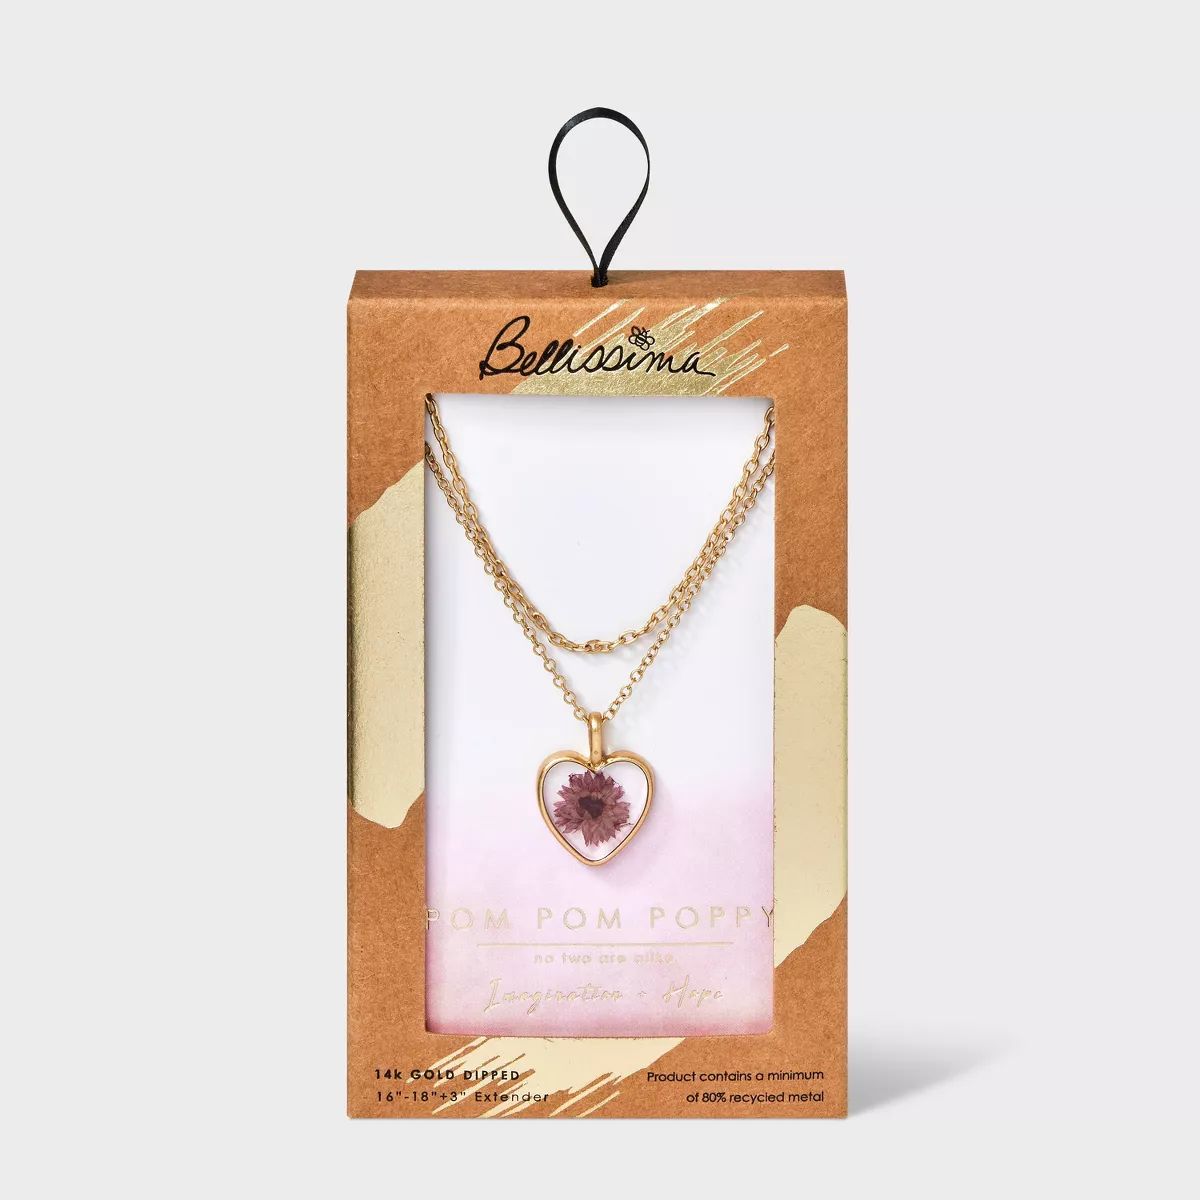 Bella Uno Bellissima Silver Plated Pom Pom Poppy Pressed Multi-Strand Necklace - Gold | Target